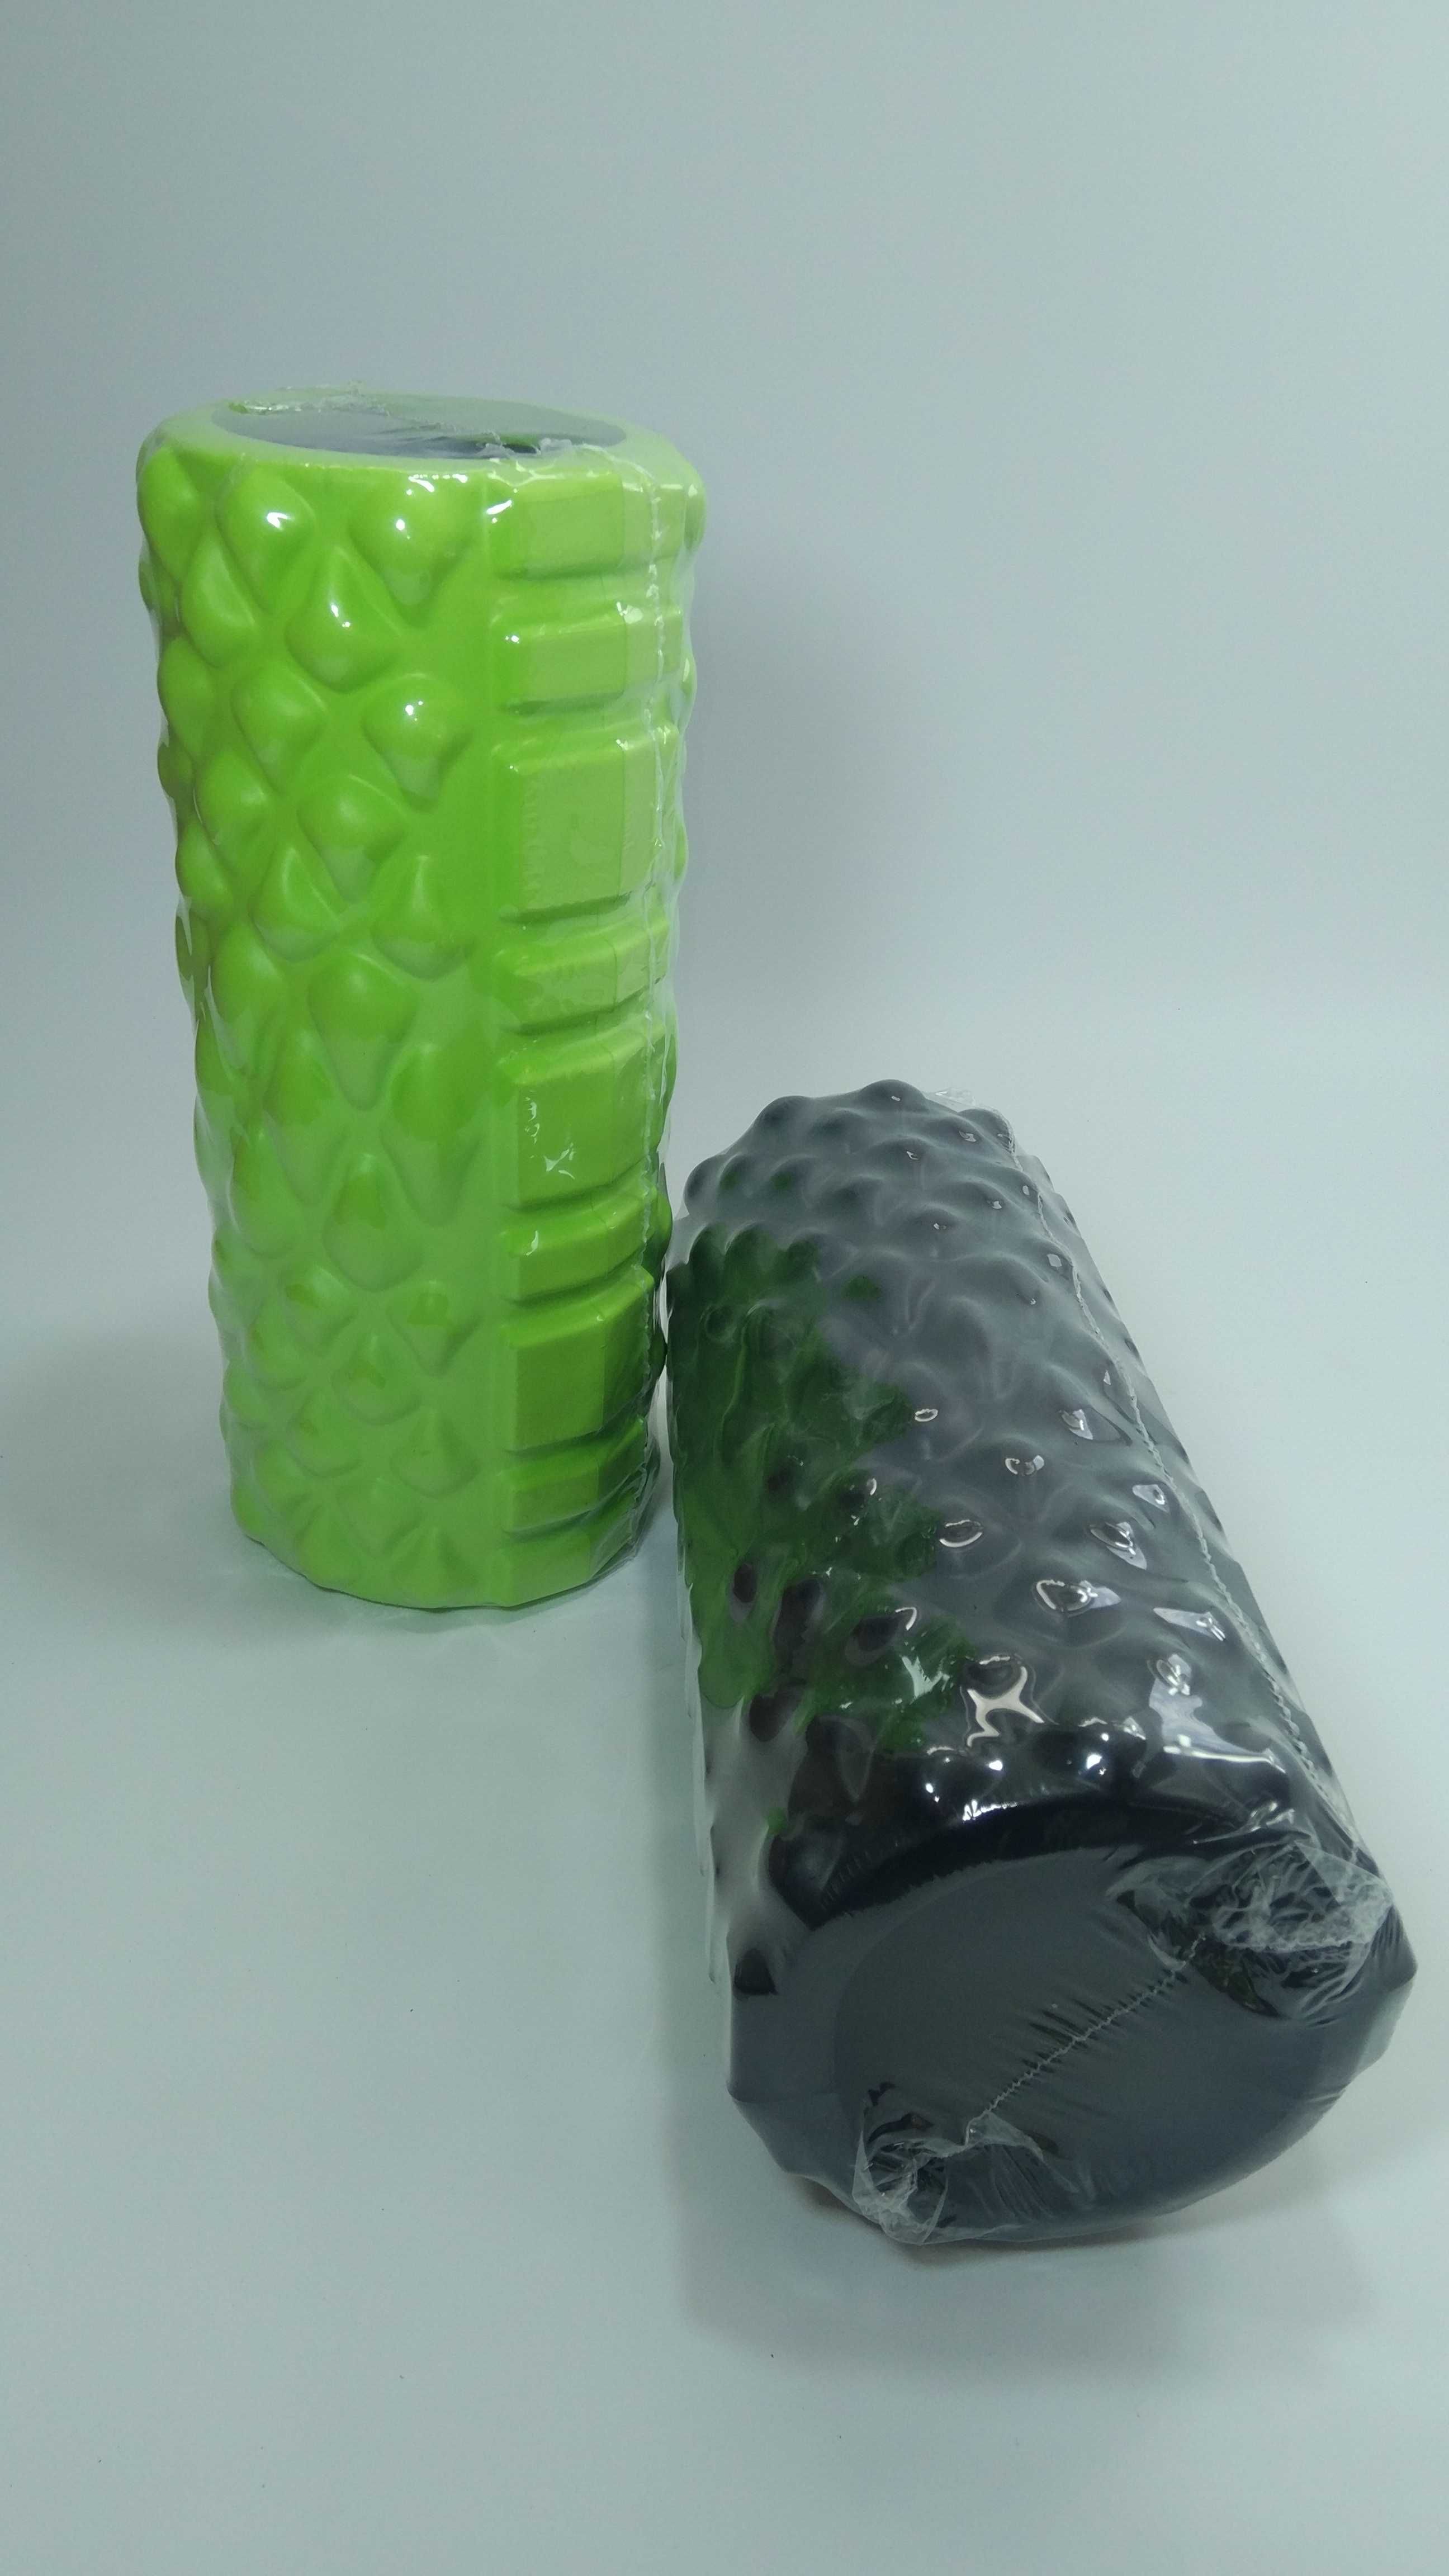 Foam Roller Larsen иновативна 2в1 без основа - ролка за тренировки